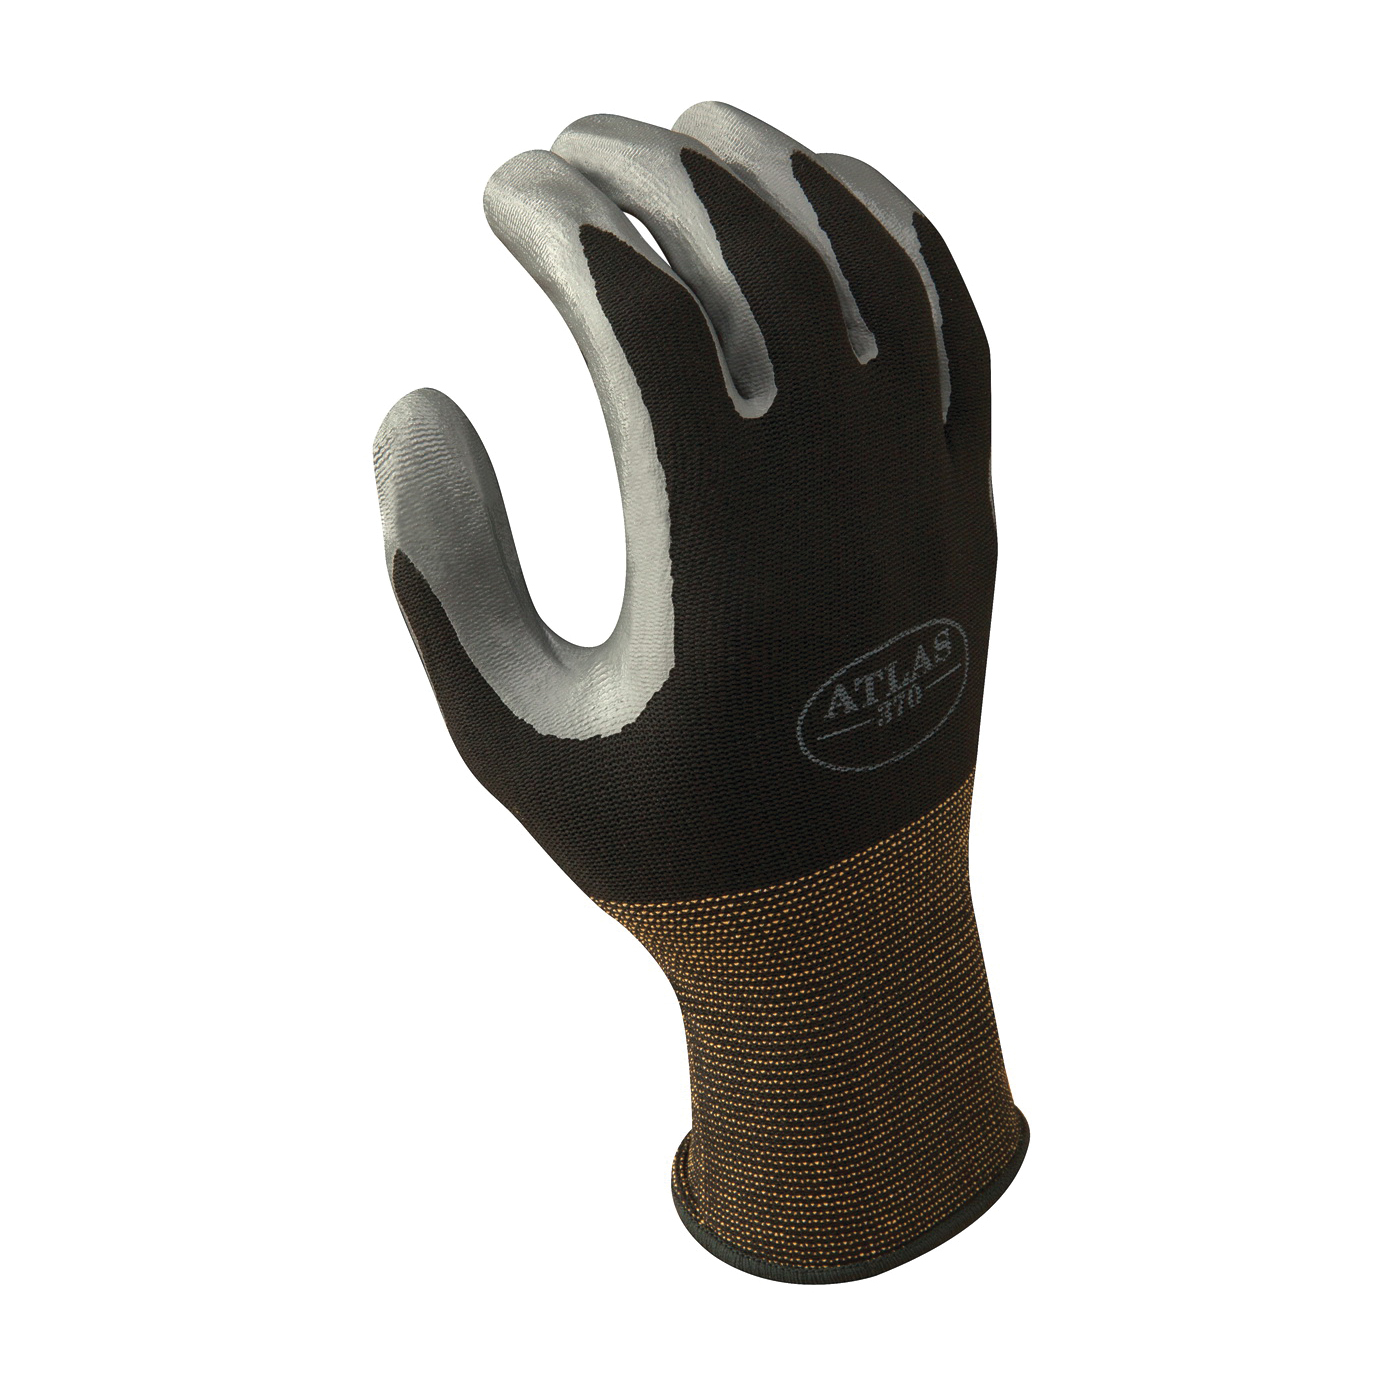 370BS-06.RT High-Flexibility Protective Gloves, S, Knit Wrist Cuff, Nitrile Glove, Black/Gray